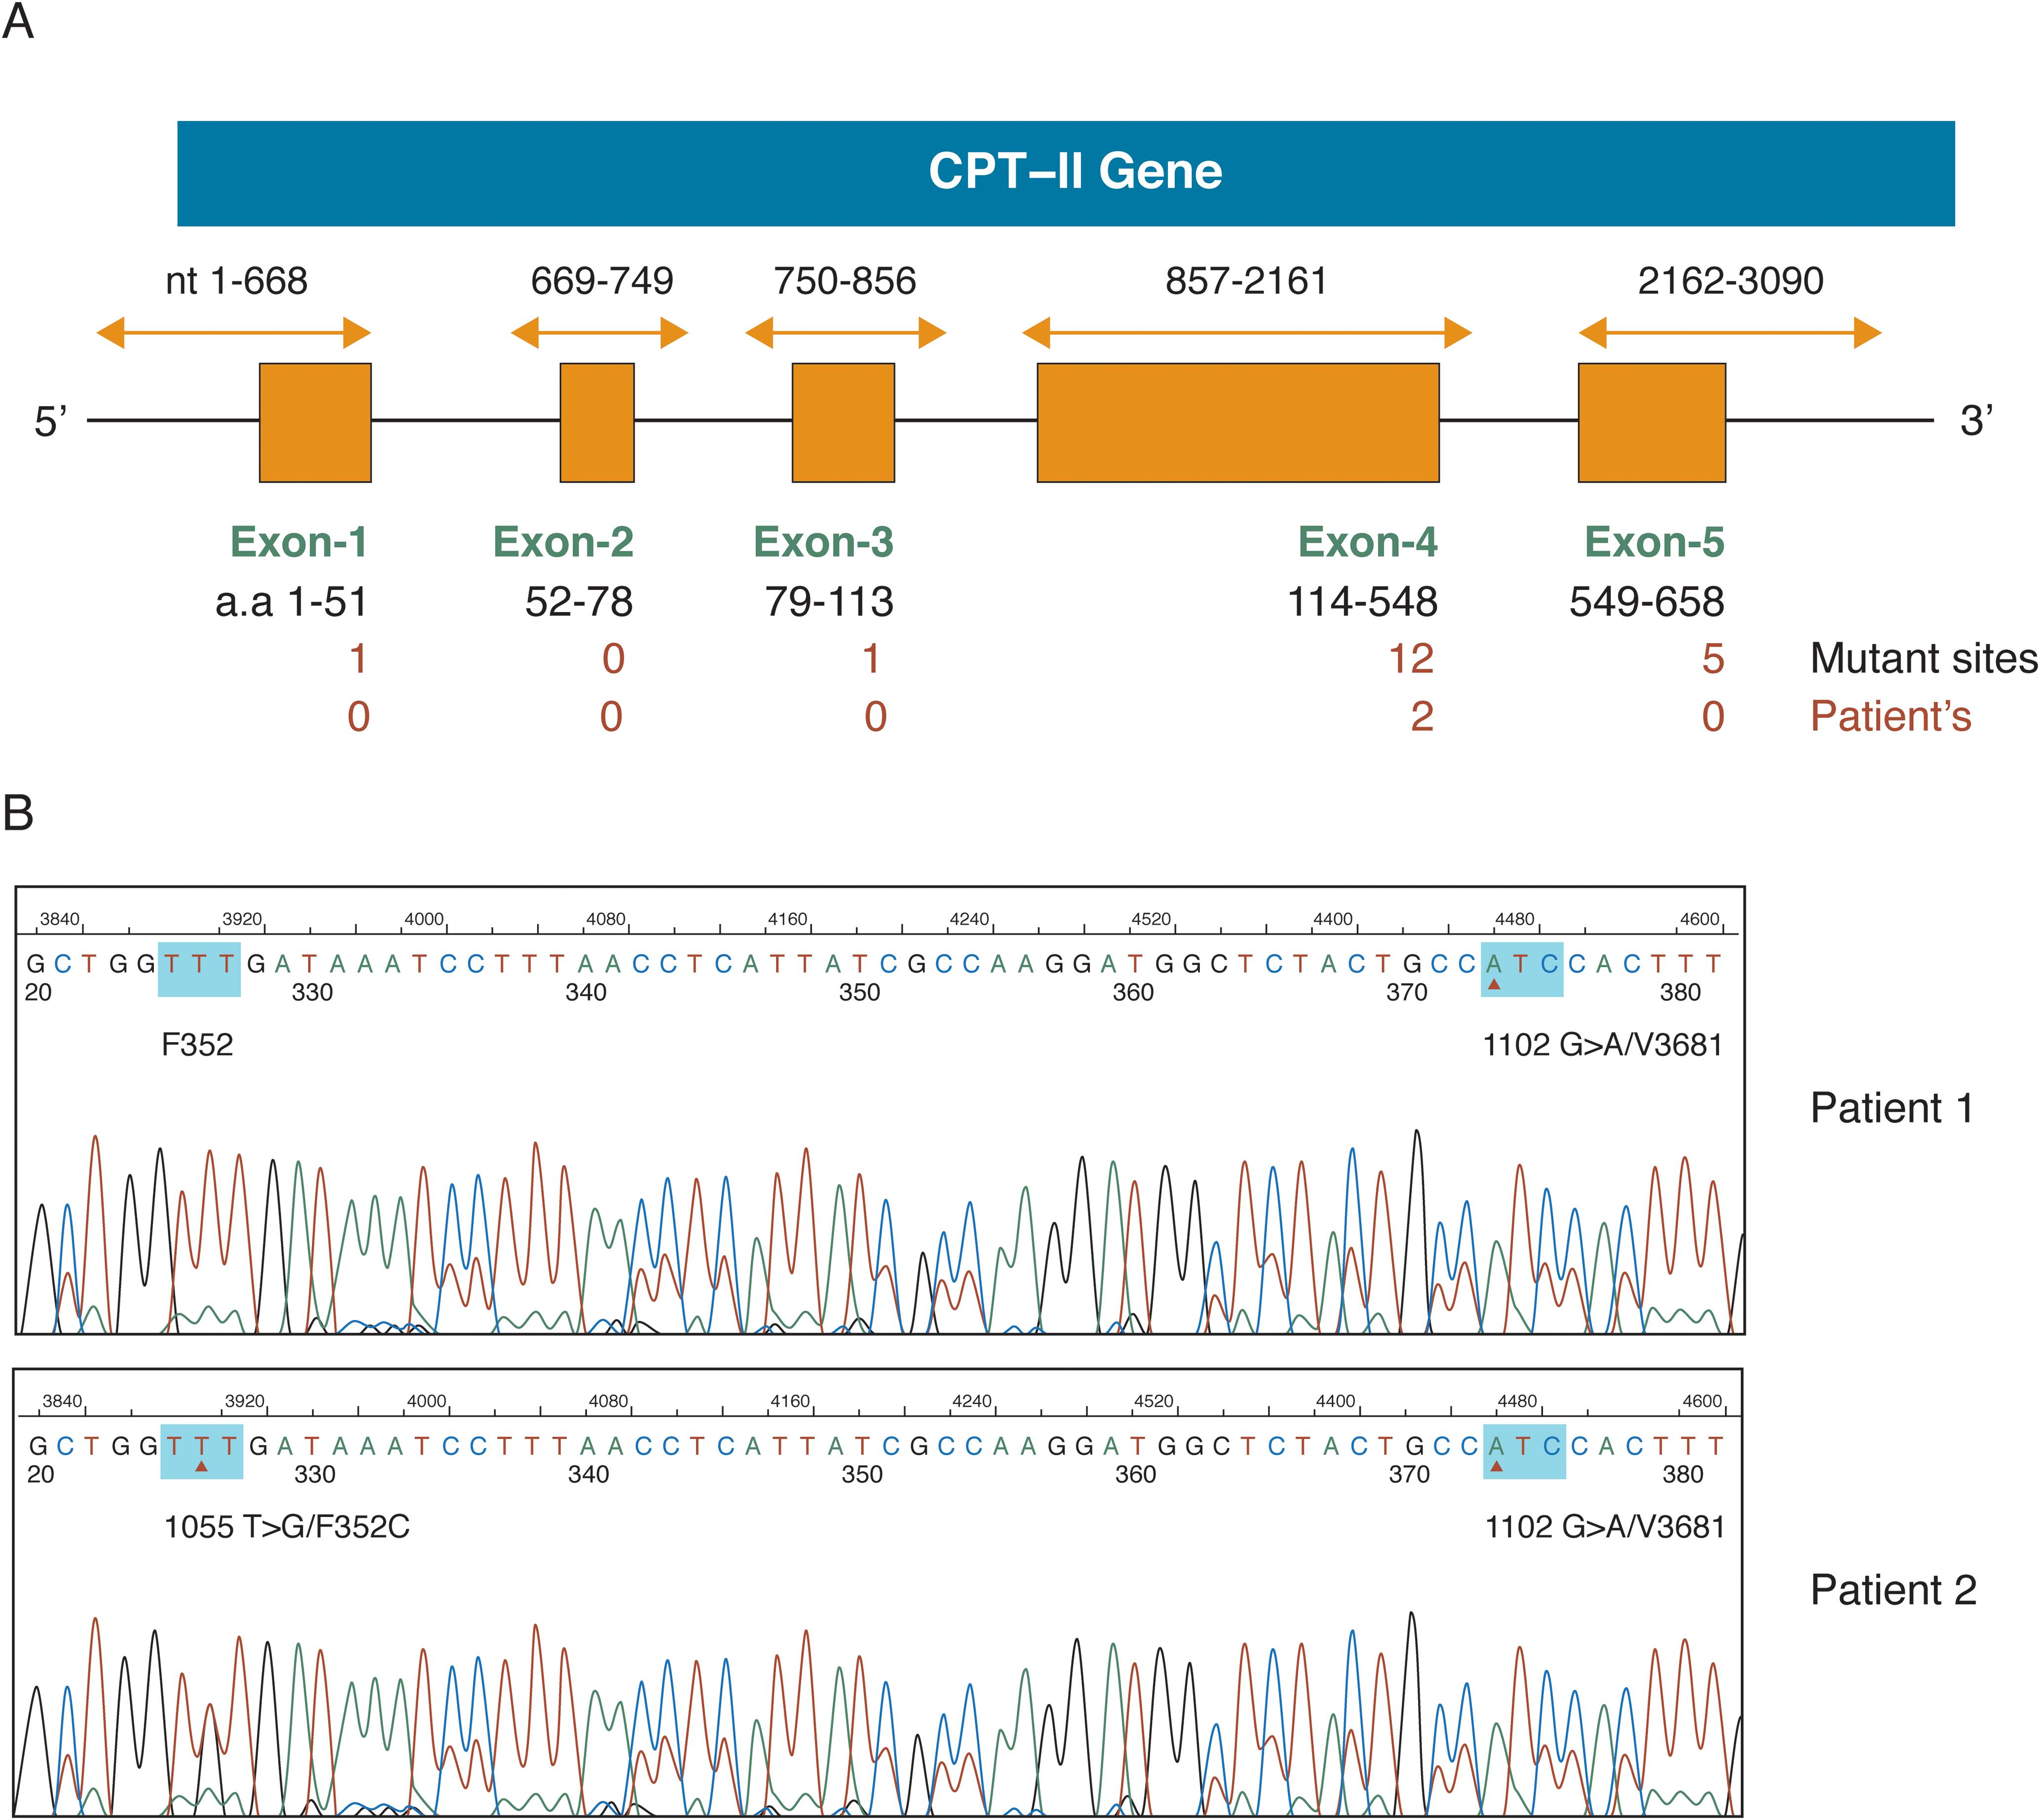 CPT-II gene mutation and hepatic lipid accumulation